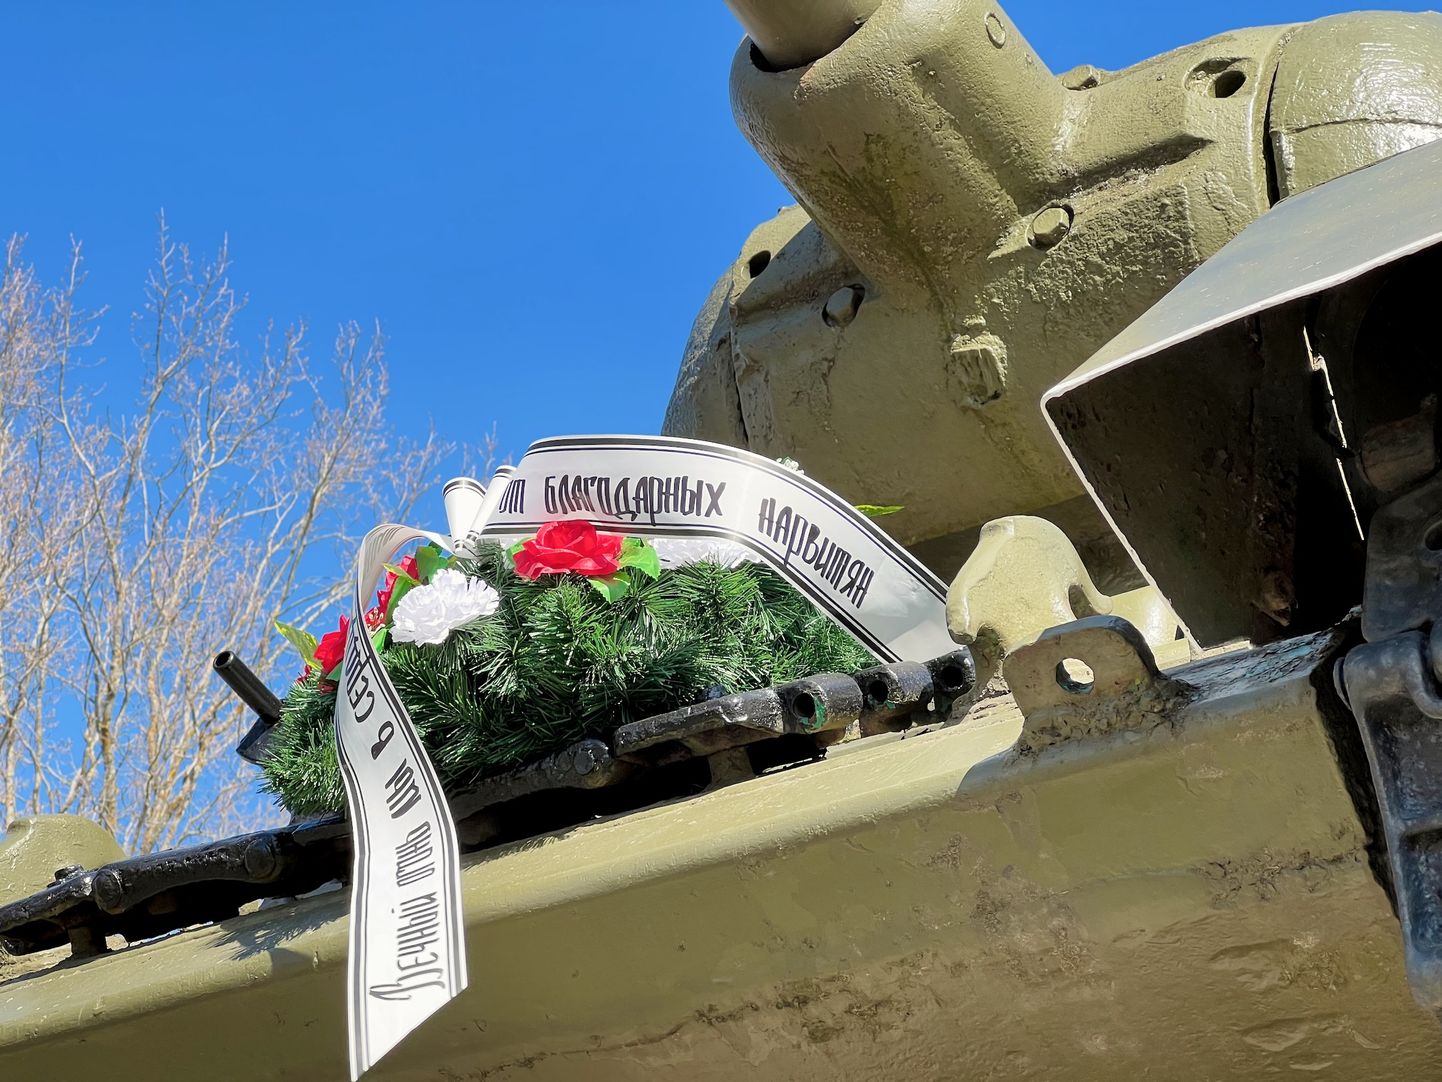 Цветы от благодарных нарвитян на броне танка Т-34 - памятника солдатам Красной армии.